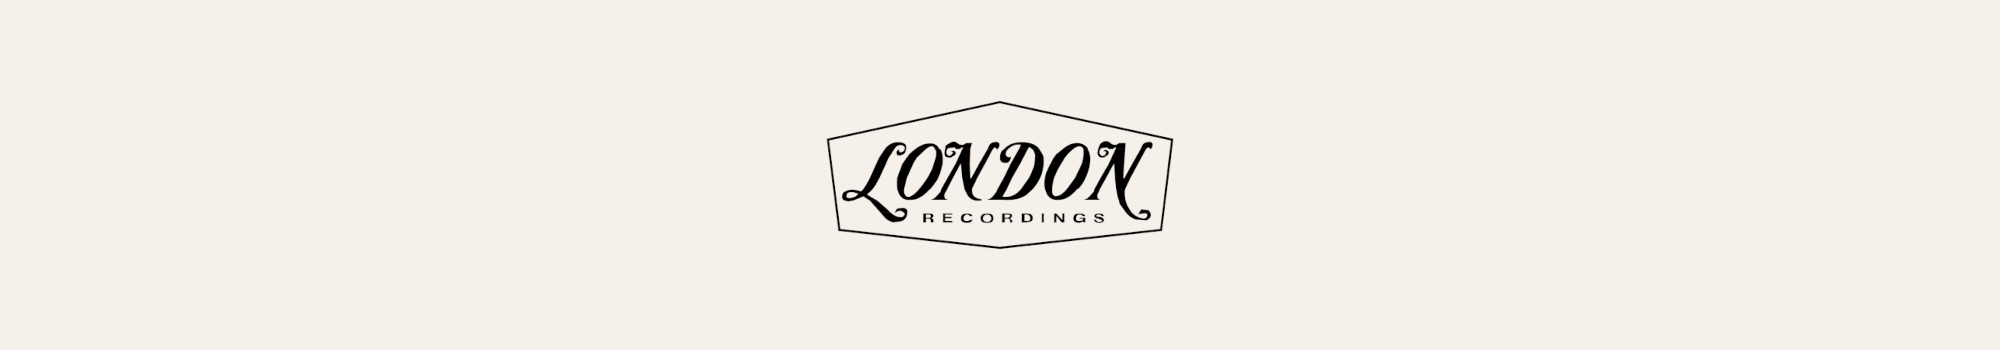 London Records logotyp